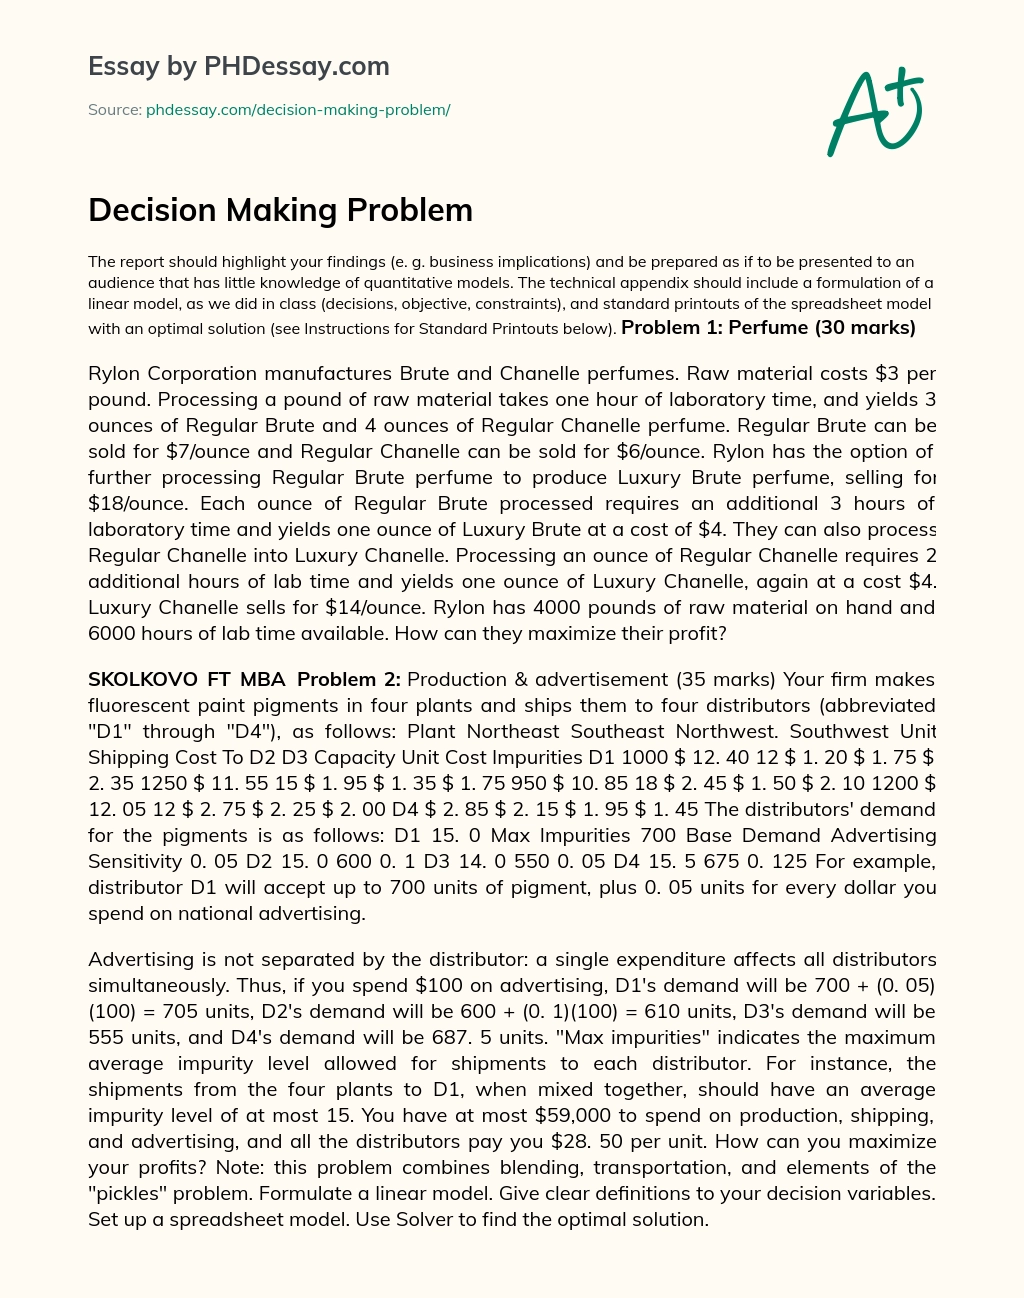 Decision Making Problem essay